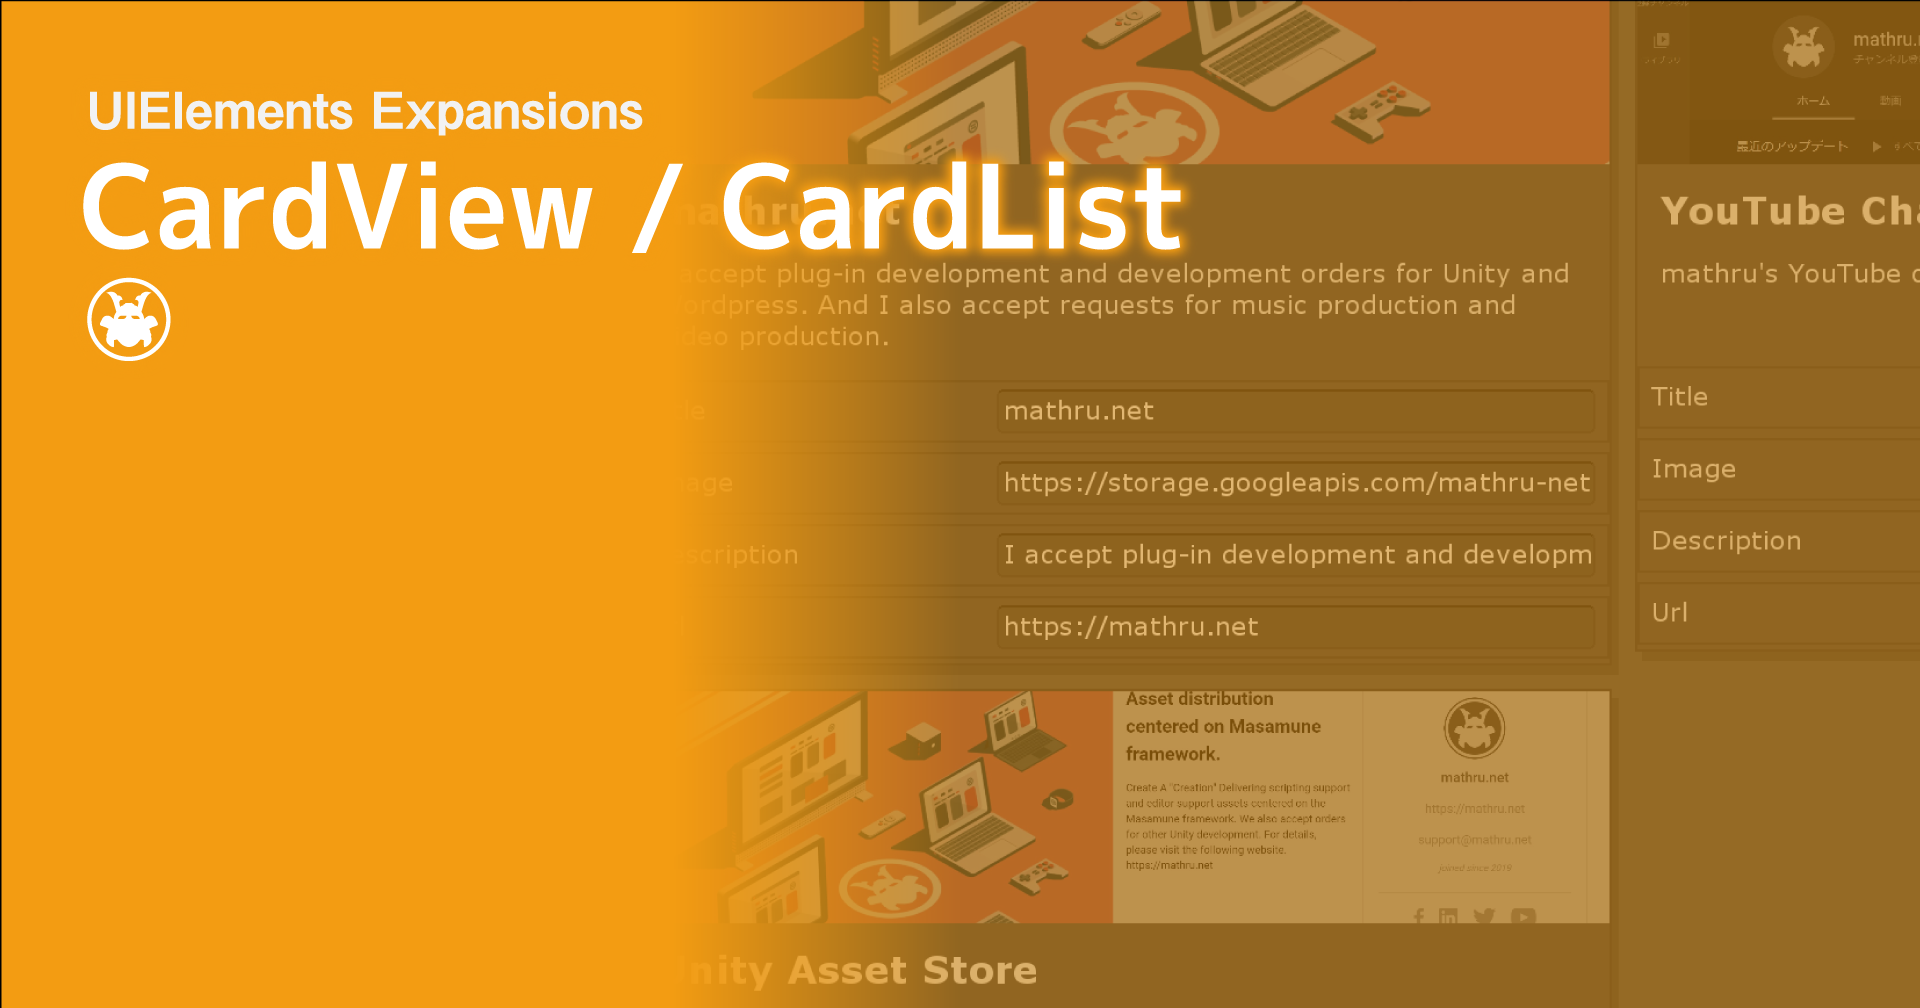 【Unity】UIElements Expansions: CardView / CardList